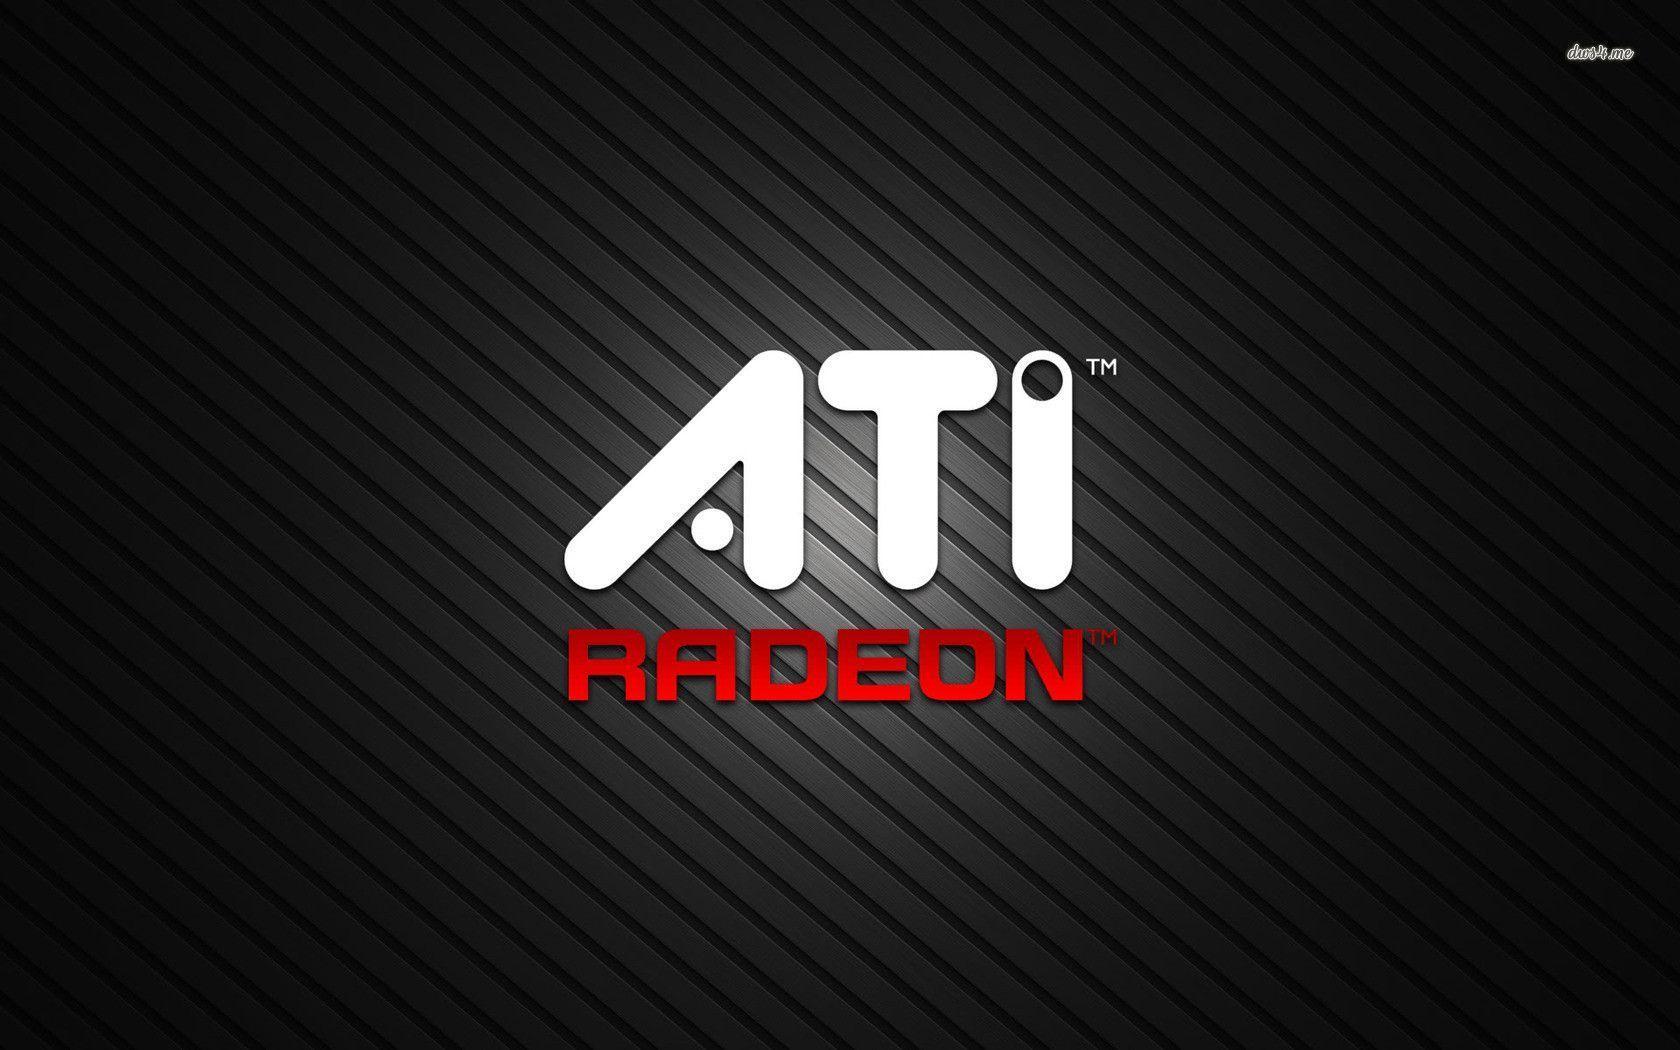 ATi Radeon wallpaper wallpaper - #